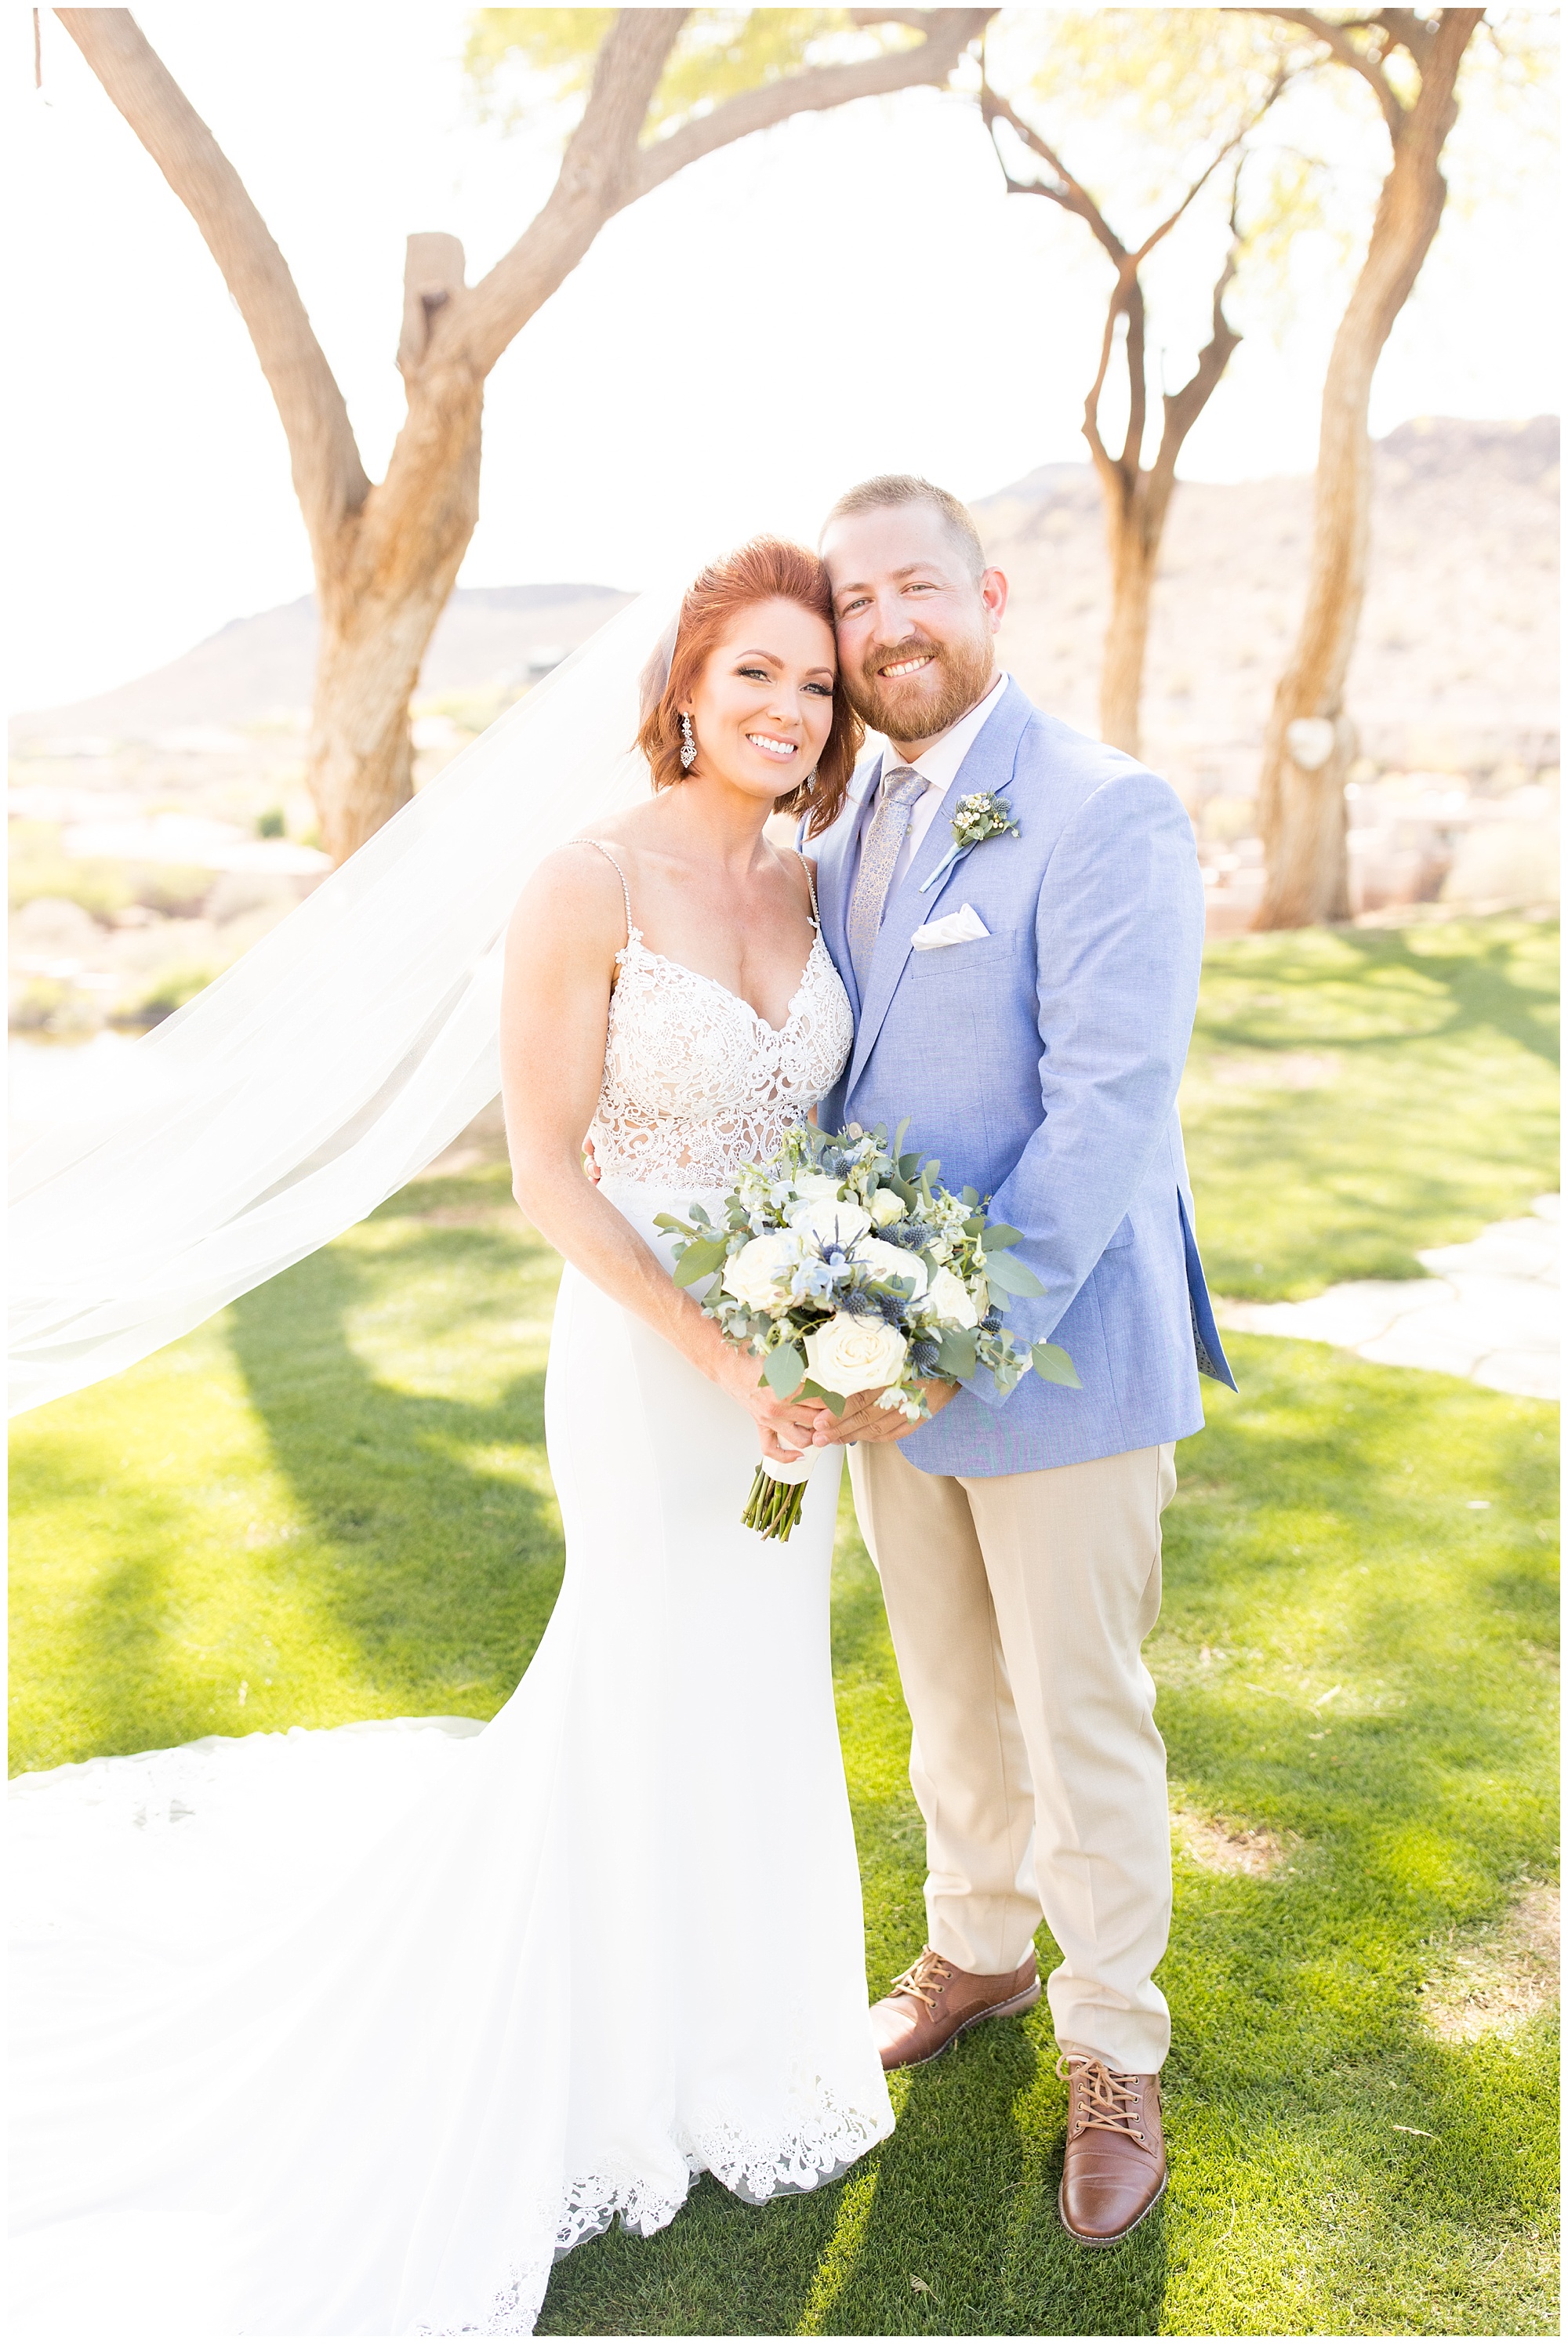 Eagle Mountain Golf Course Wedding | Fountain Hills, Arizona |Taylor & Leah